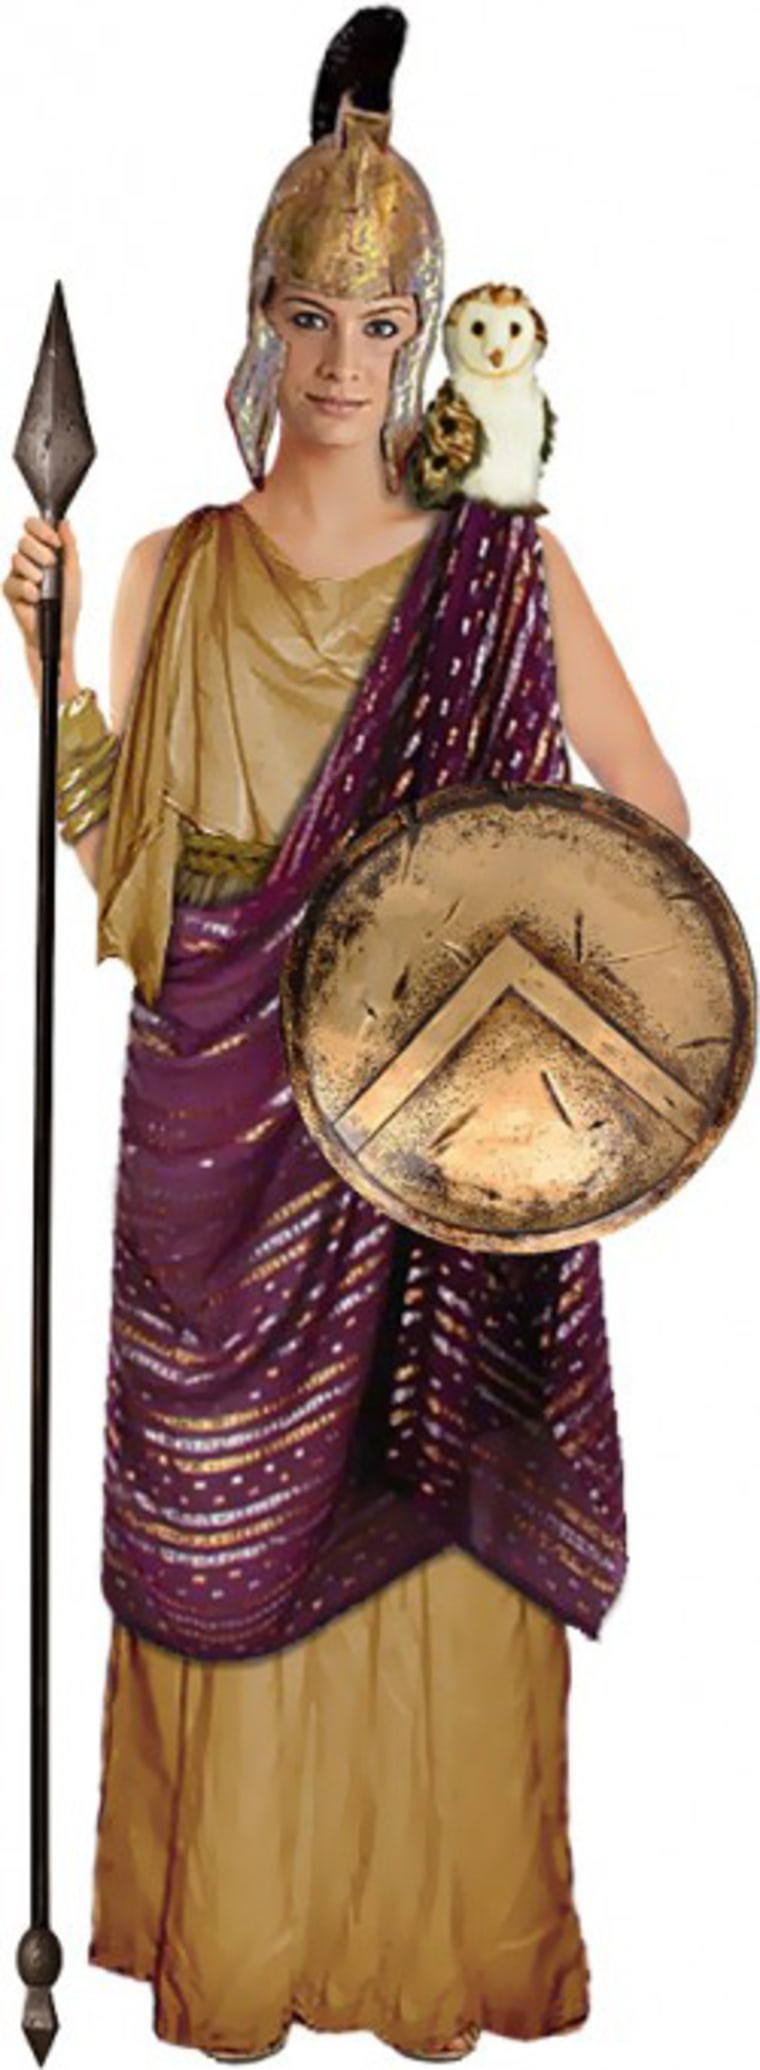 Athena costume